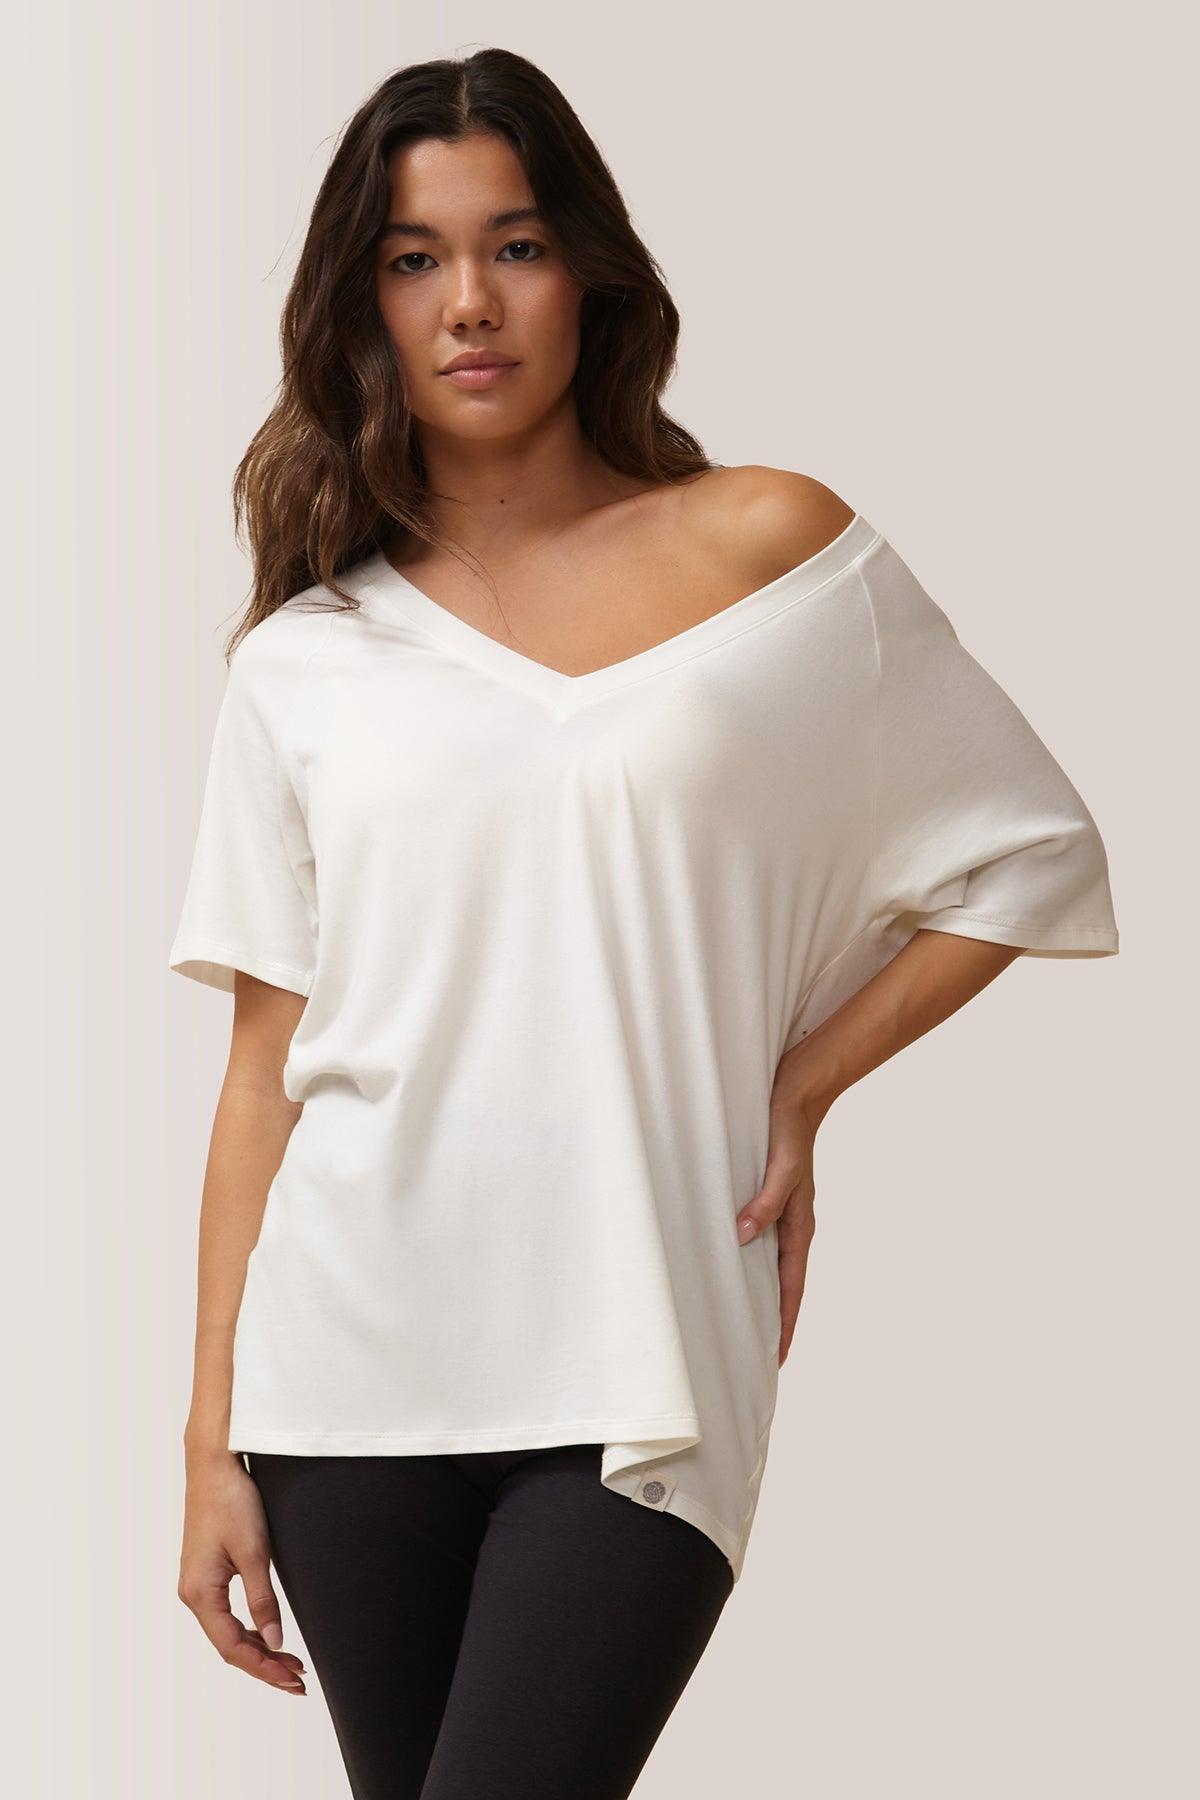 Femme vêtue du t-shirt blissful flow par Rose Boreal. / Women wearing the blissful flow t-shirt by Rose Boreal. - Natural White